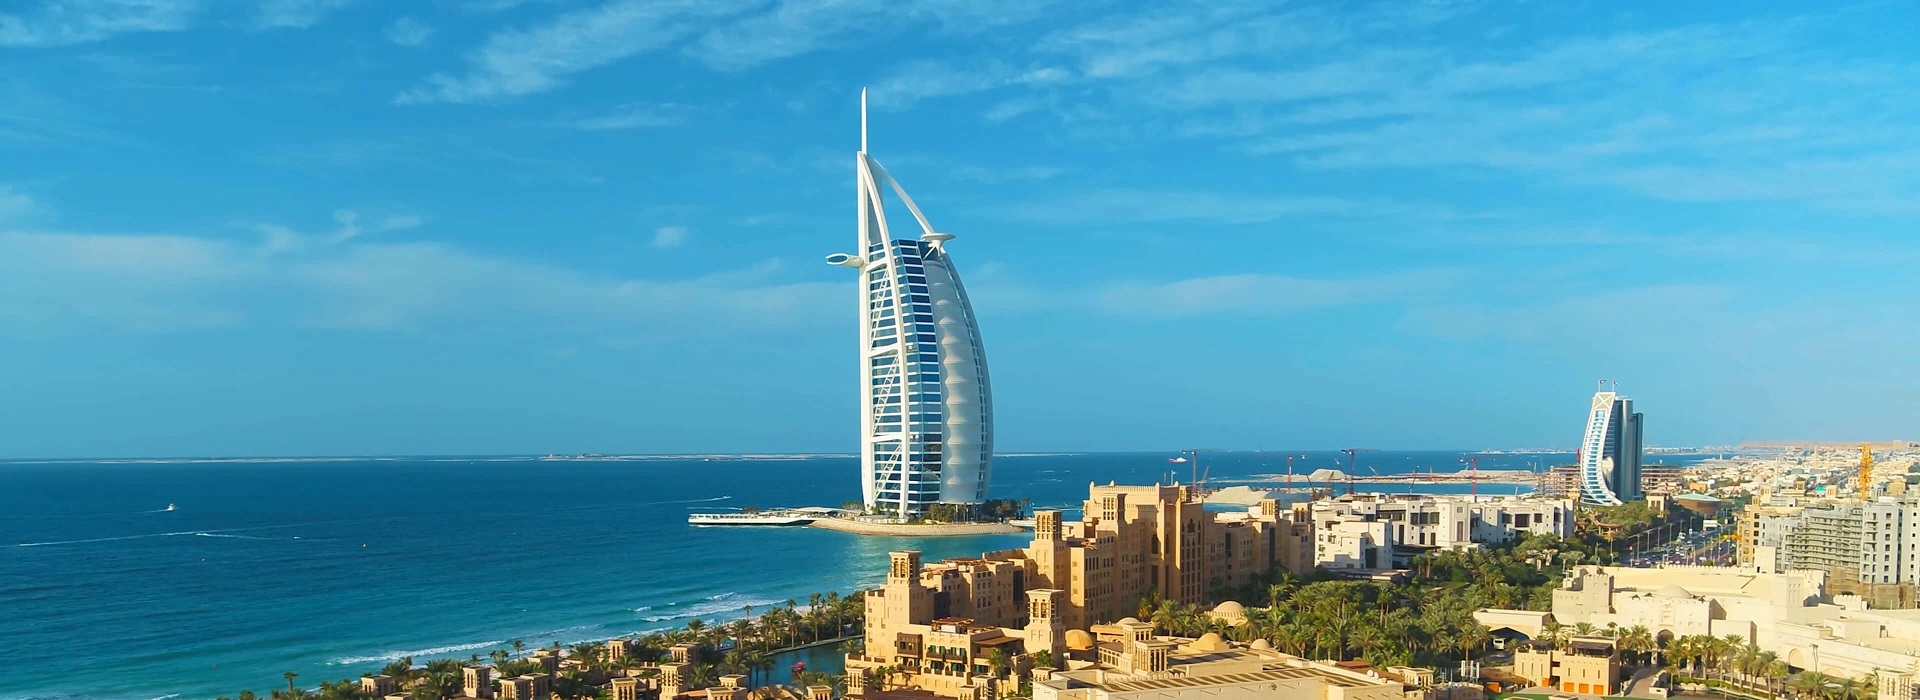 Tehnički i energetski gasovi |  Luxury car rental in Dubai, Lamborghini rental Dubai